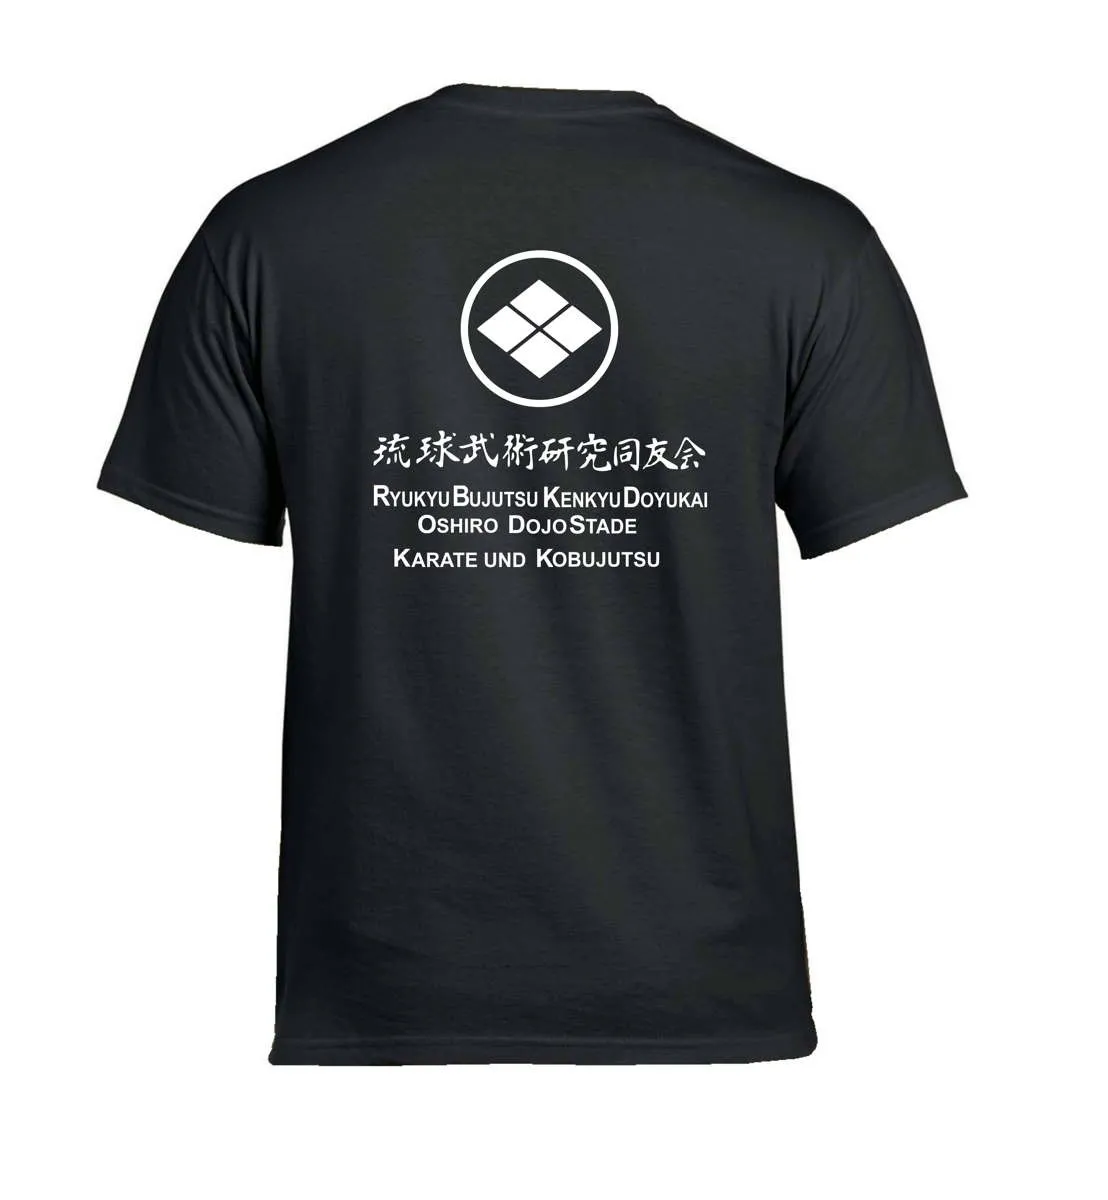 T-Shirt Oshiro Dojo Stade black